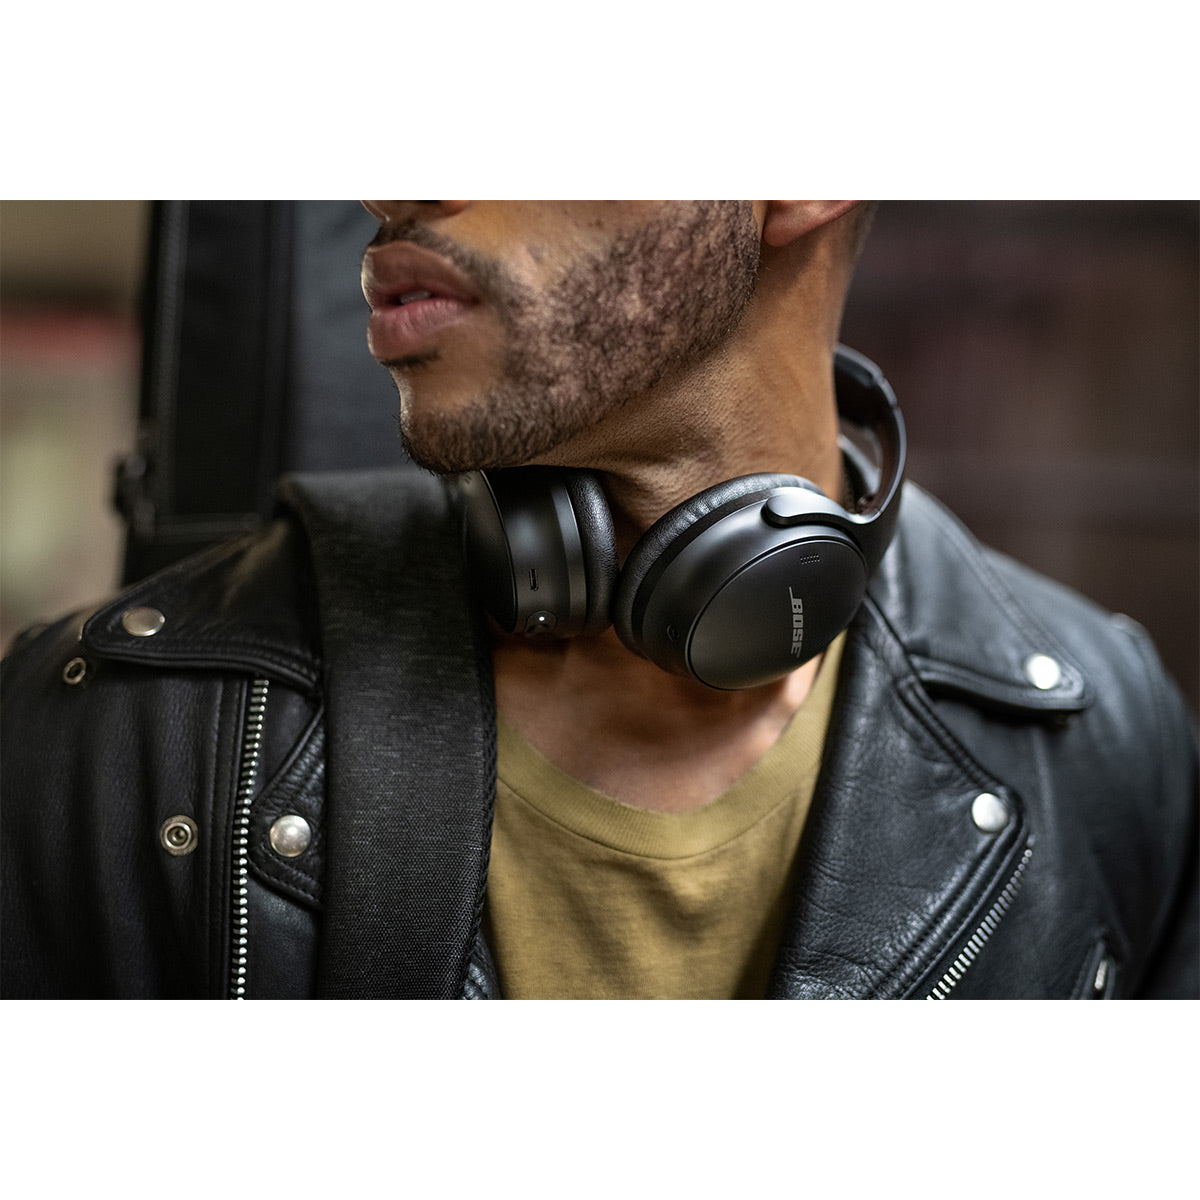 Bose QuietComfort 45 Wireless Noise Canceling Headphones (Black)